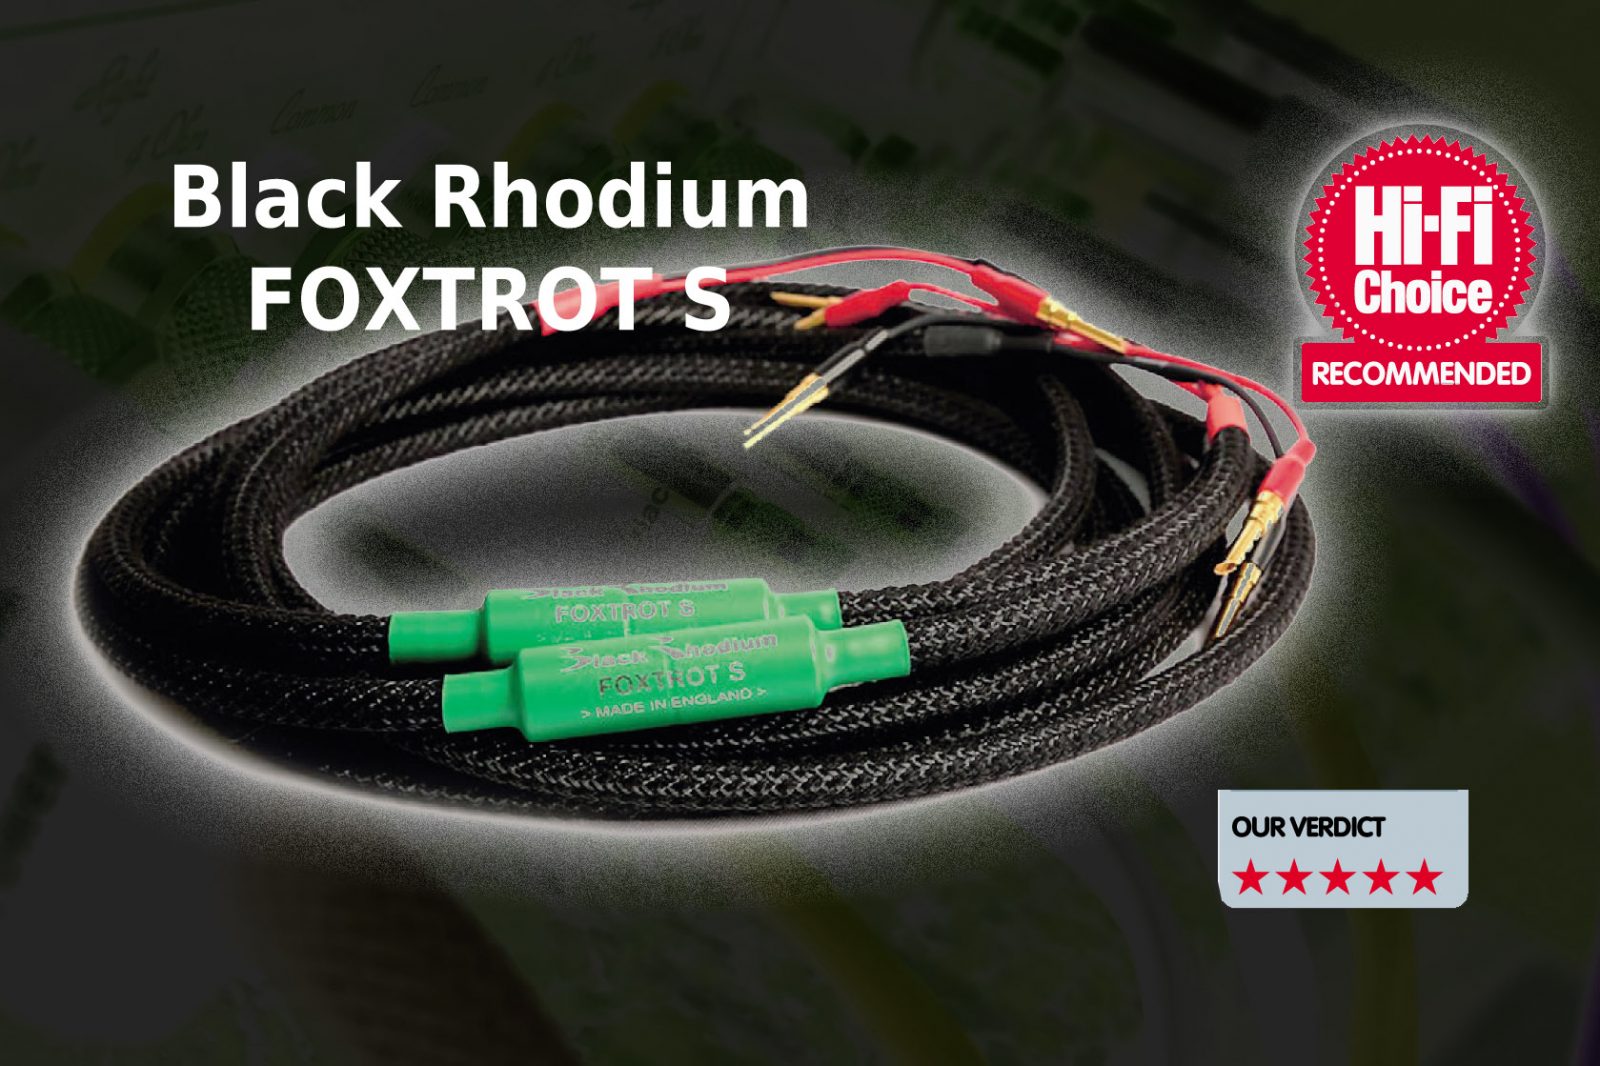 HFC_476_Black_Rhodium_Foxtrot_S-1600x1066.jpg